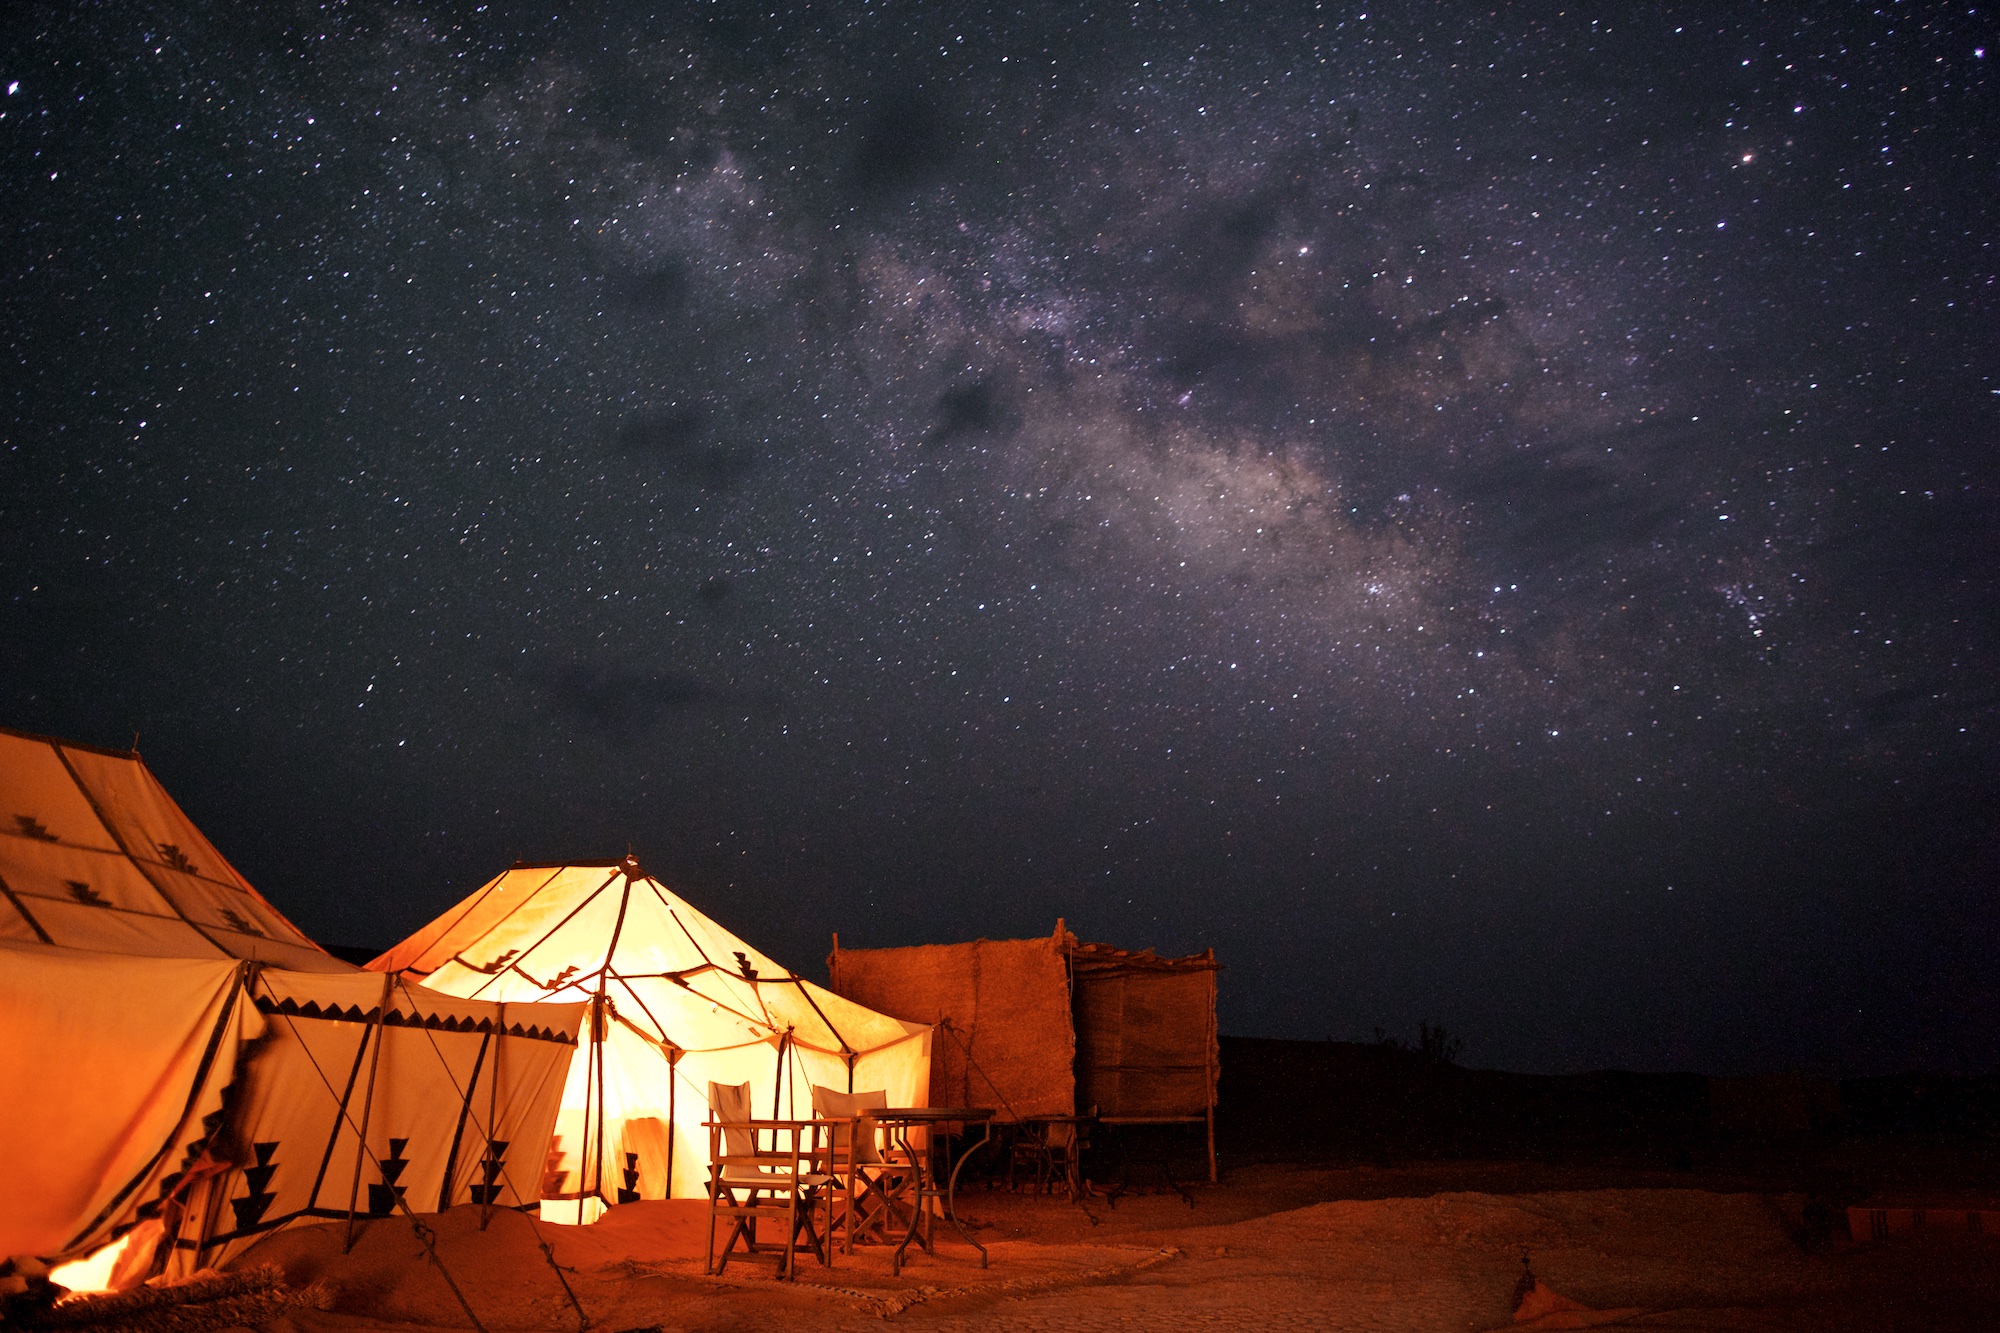 sleeping under thousands of stars in the sahara desert. beautiful!